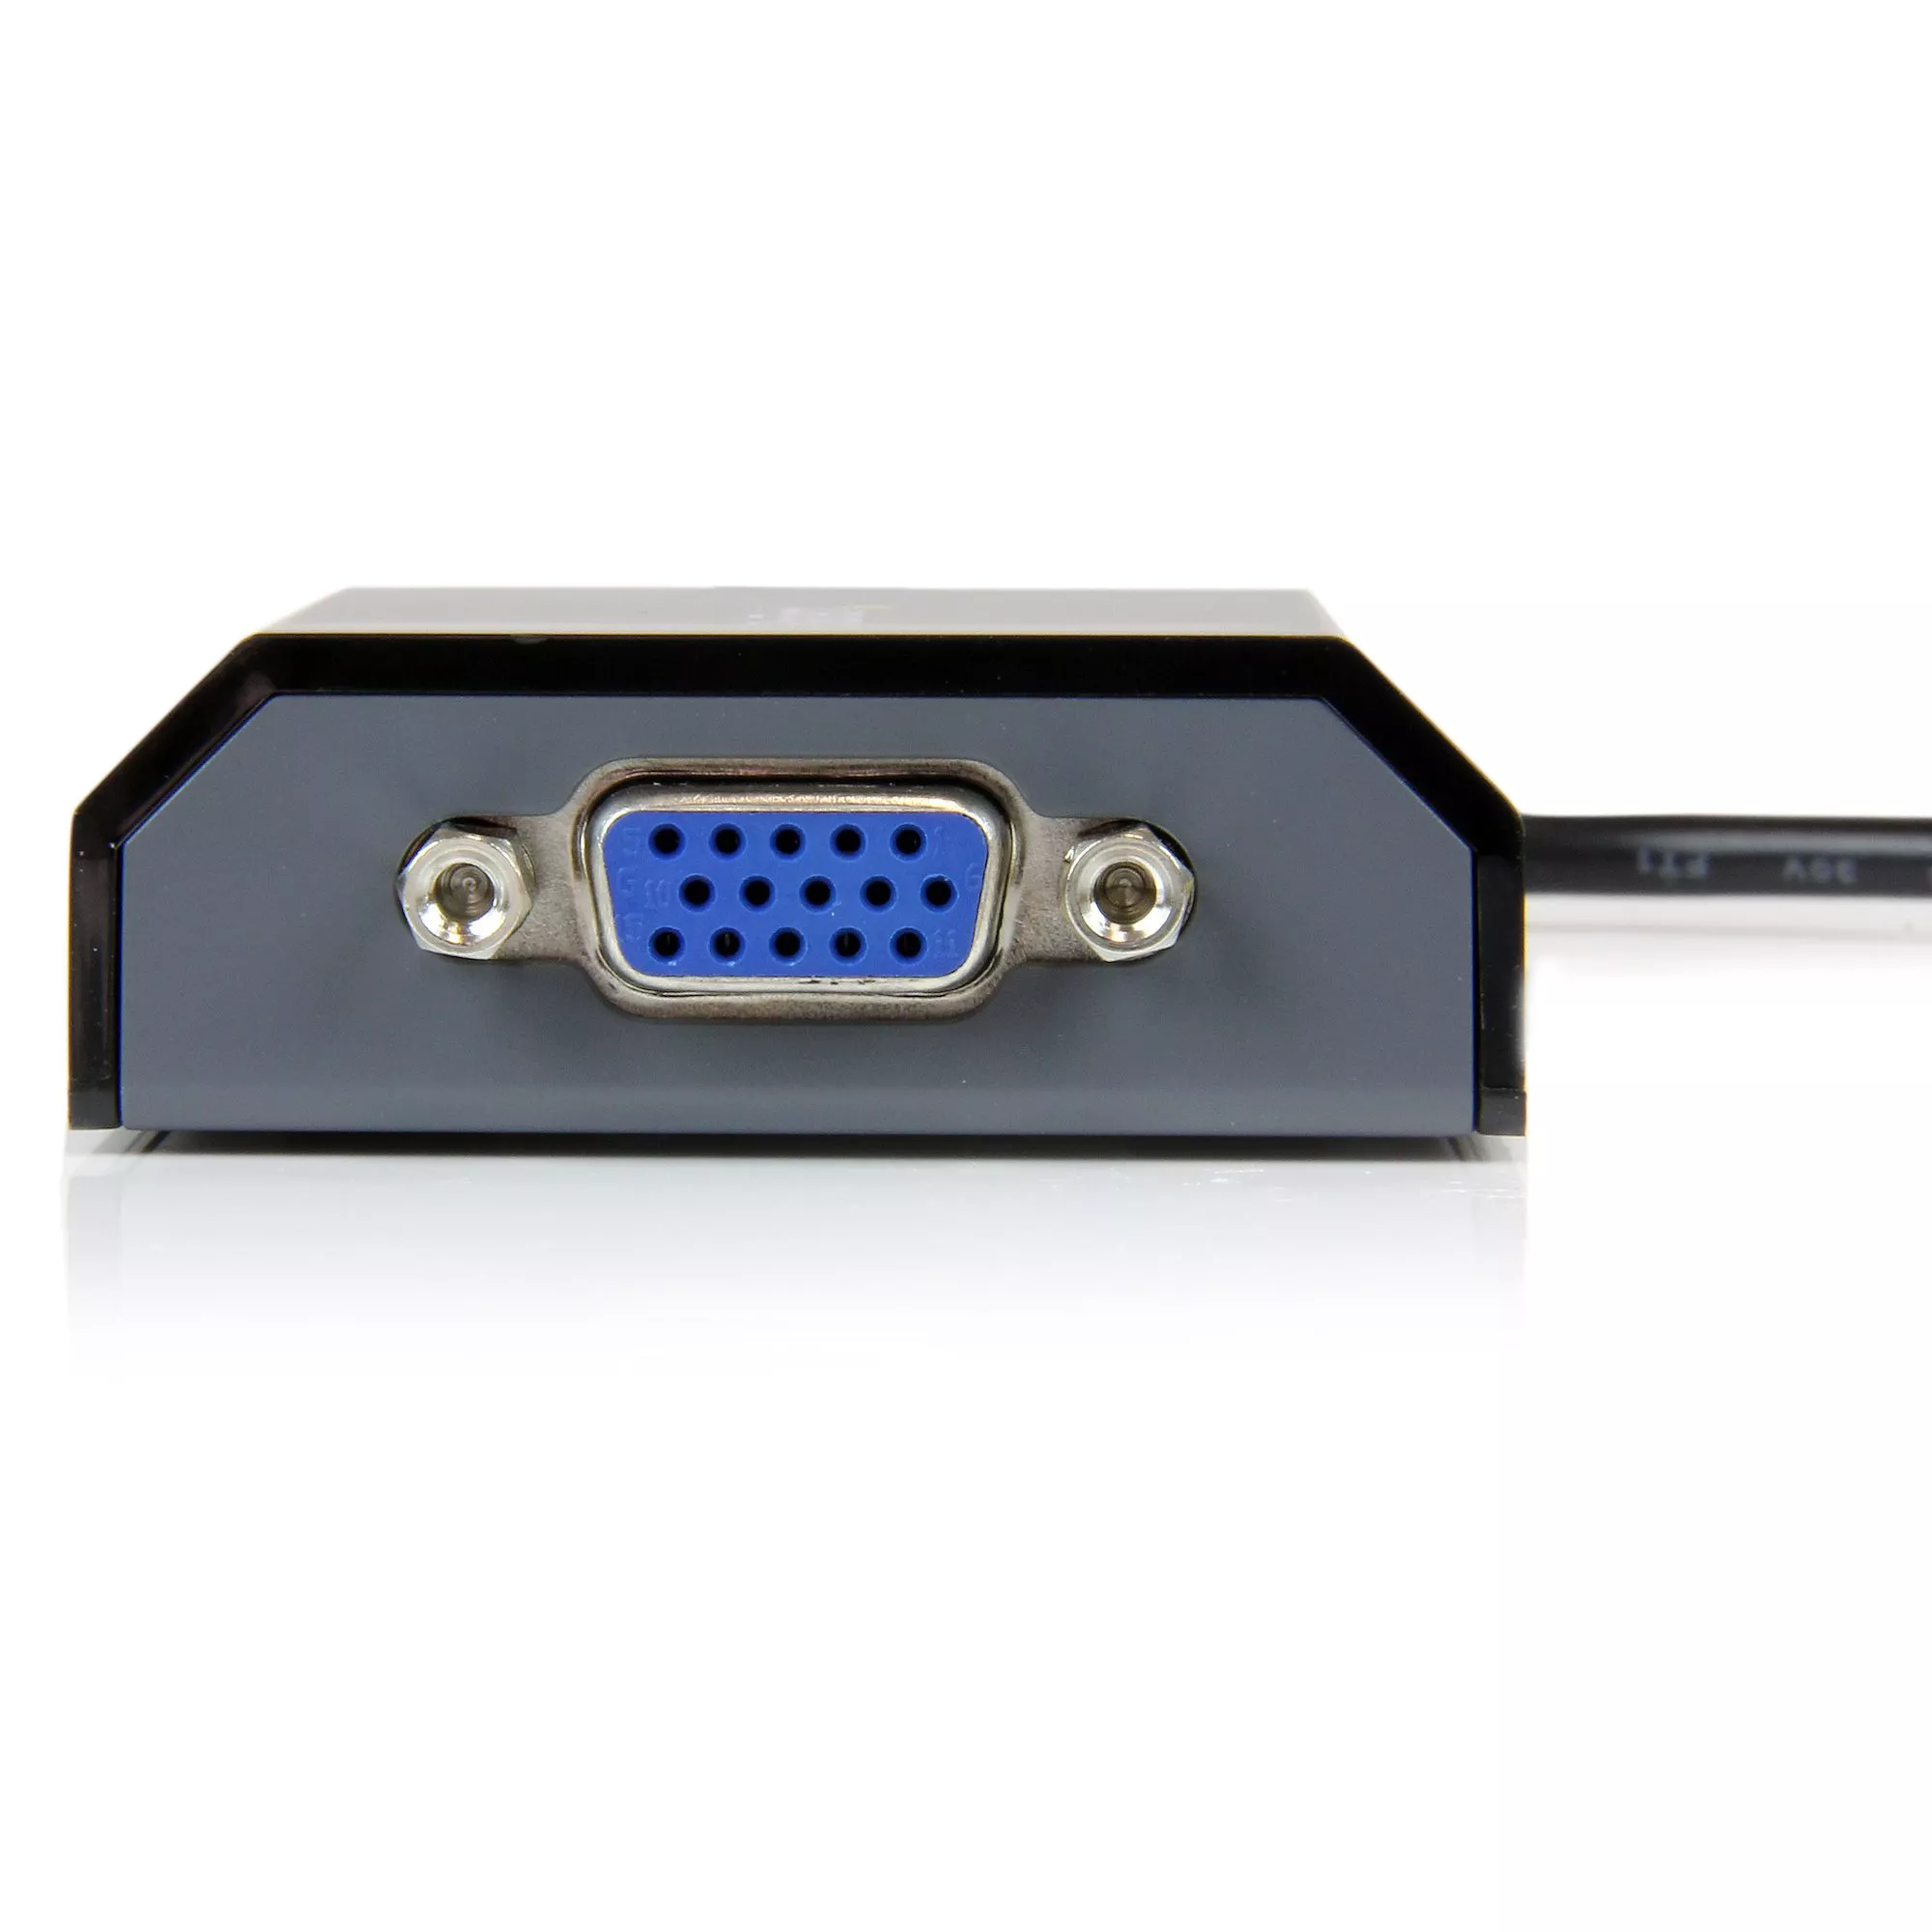 Vente StarTech.com Adaptateur USB vers VGA - 1920x1200 - StarTech.com au meilleur prix - visuel 6